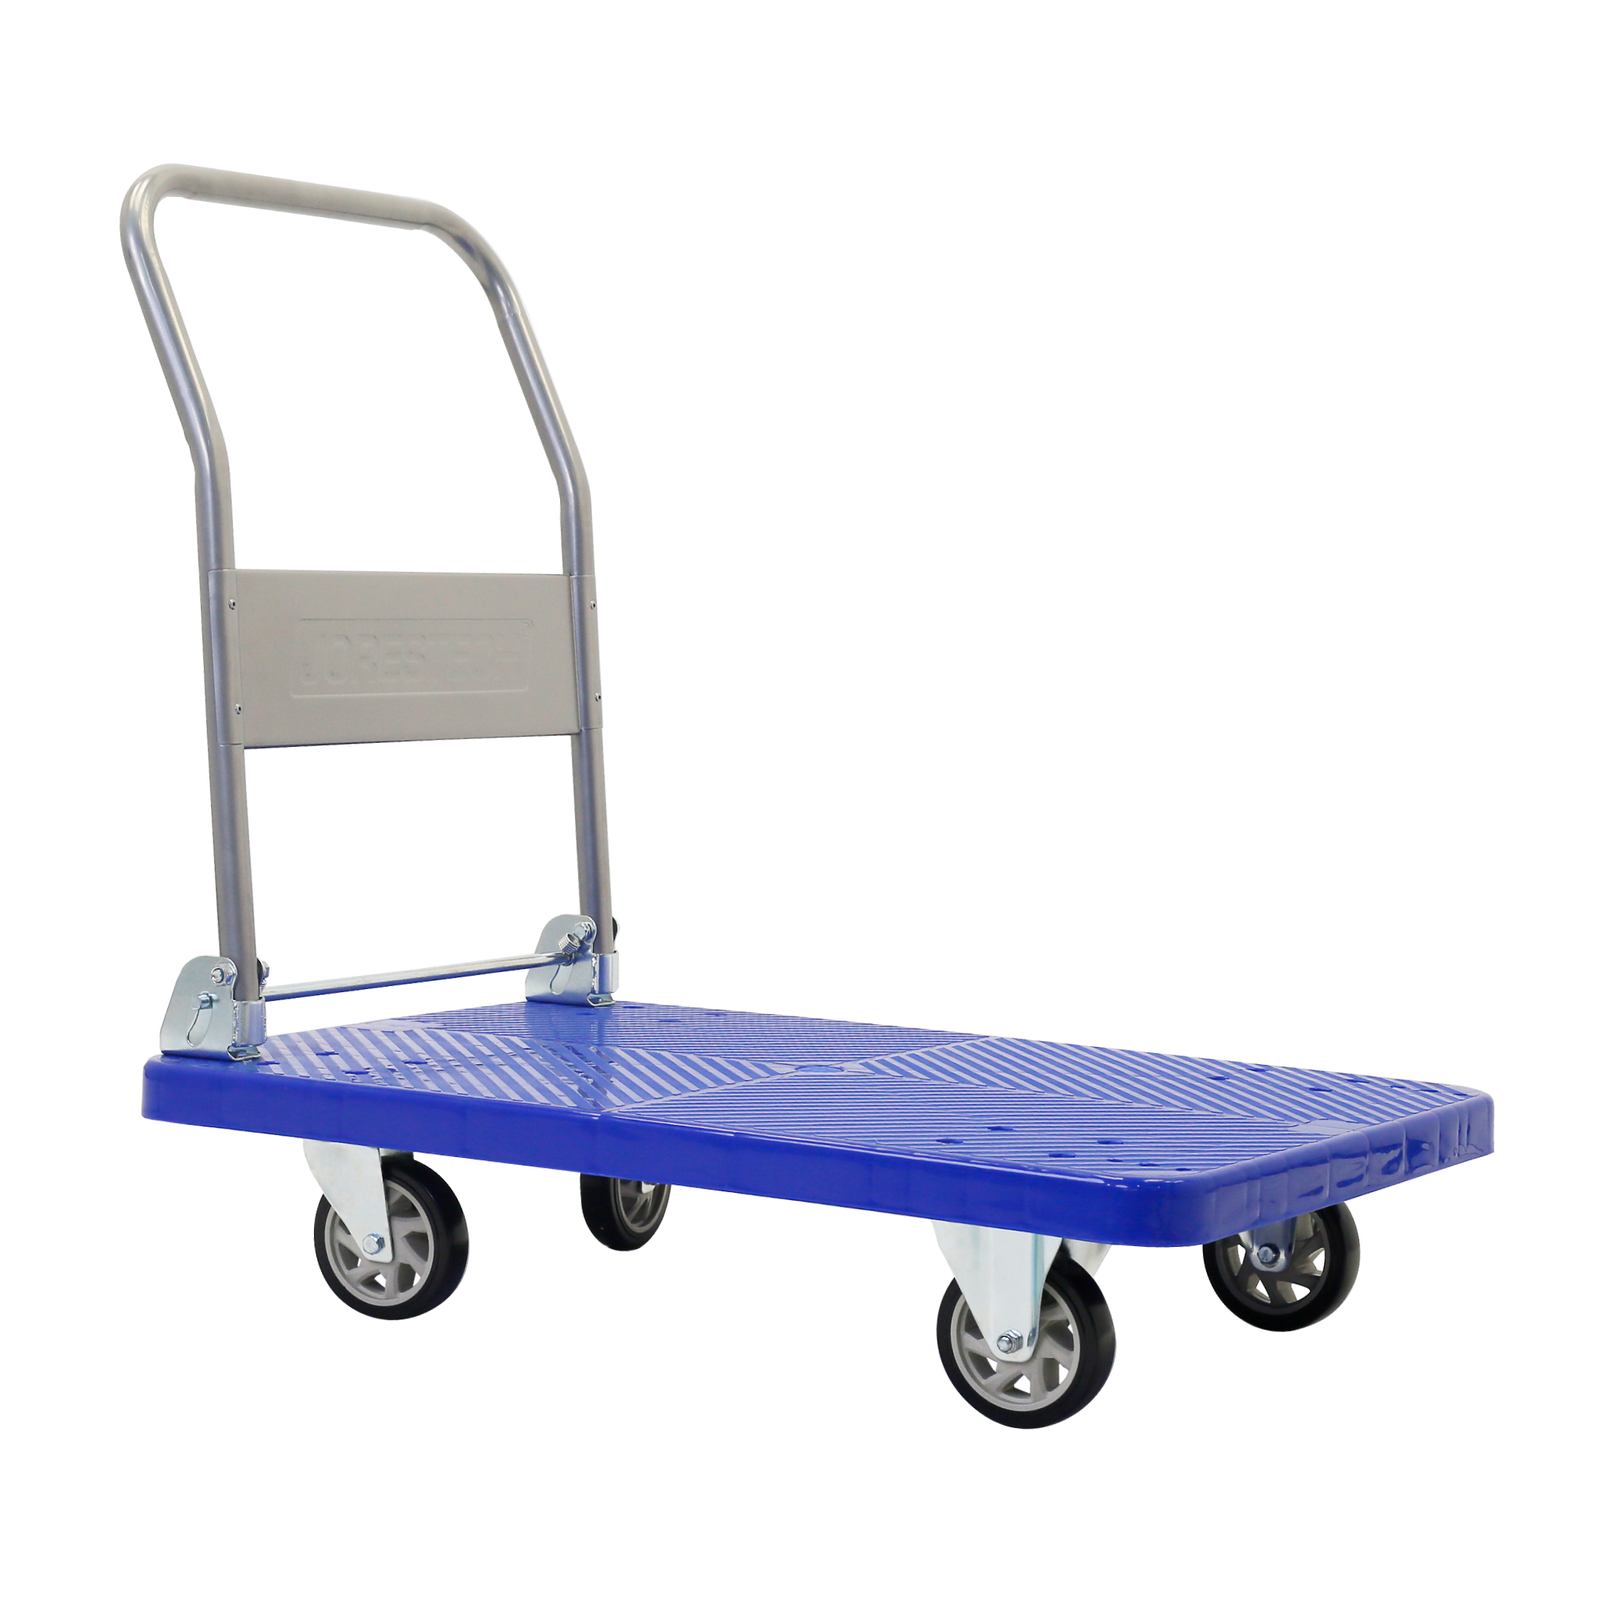 Blue and silver JORES TECHNOLOGIES® foldable platform cart